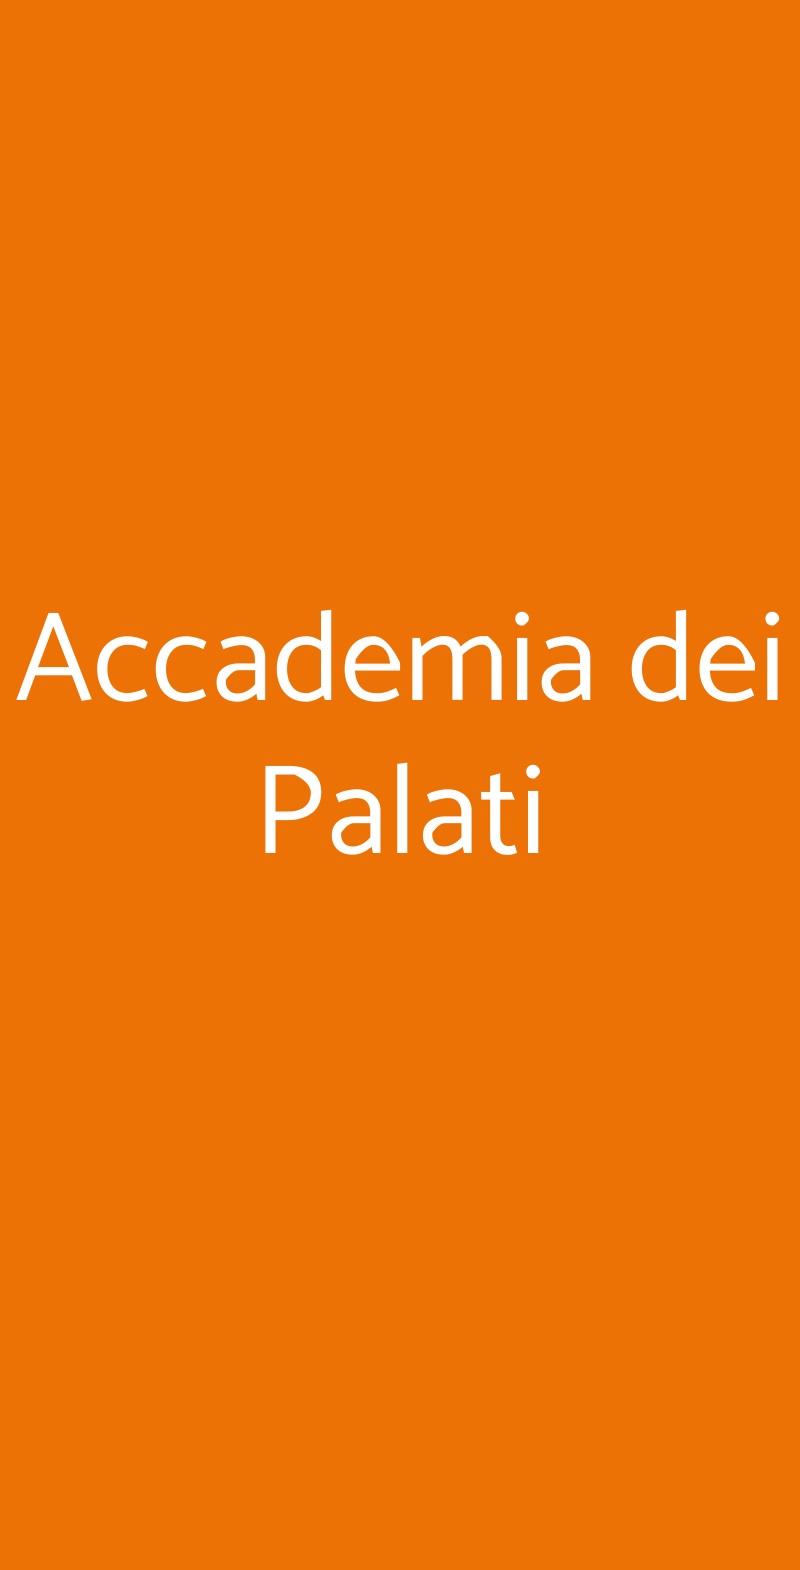 Accademia dei Palati Firenze menù 1 pagina